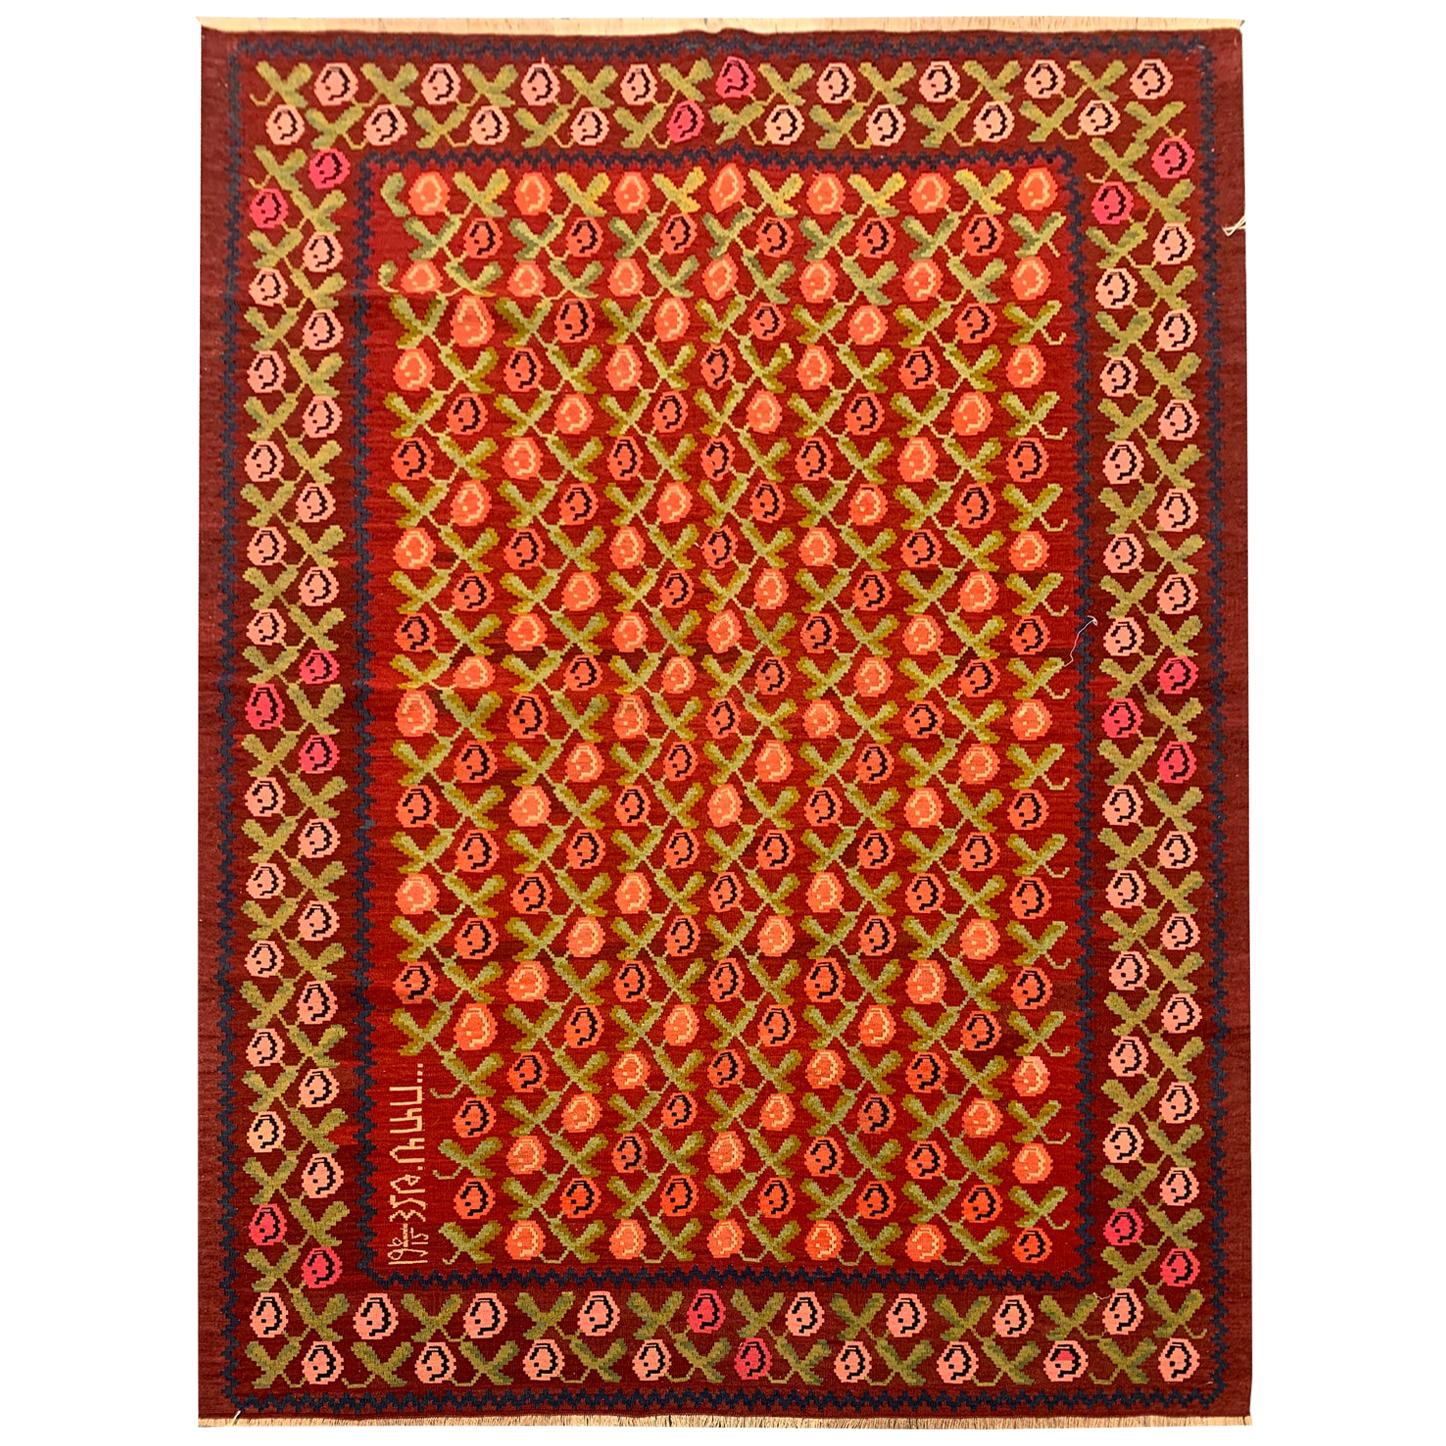 Antique Kilim Rugs Armenian Handmade Floral Kilim Red Wool Rug For Sale